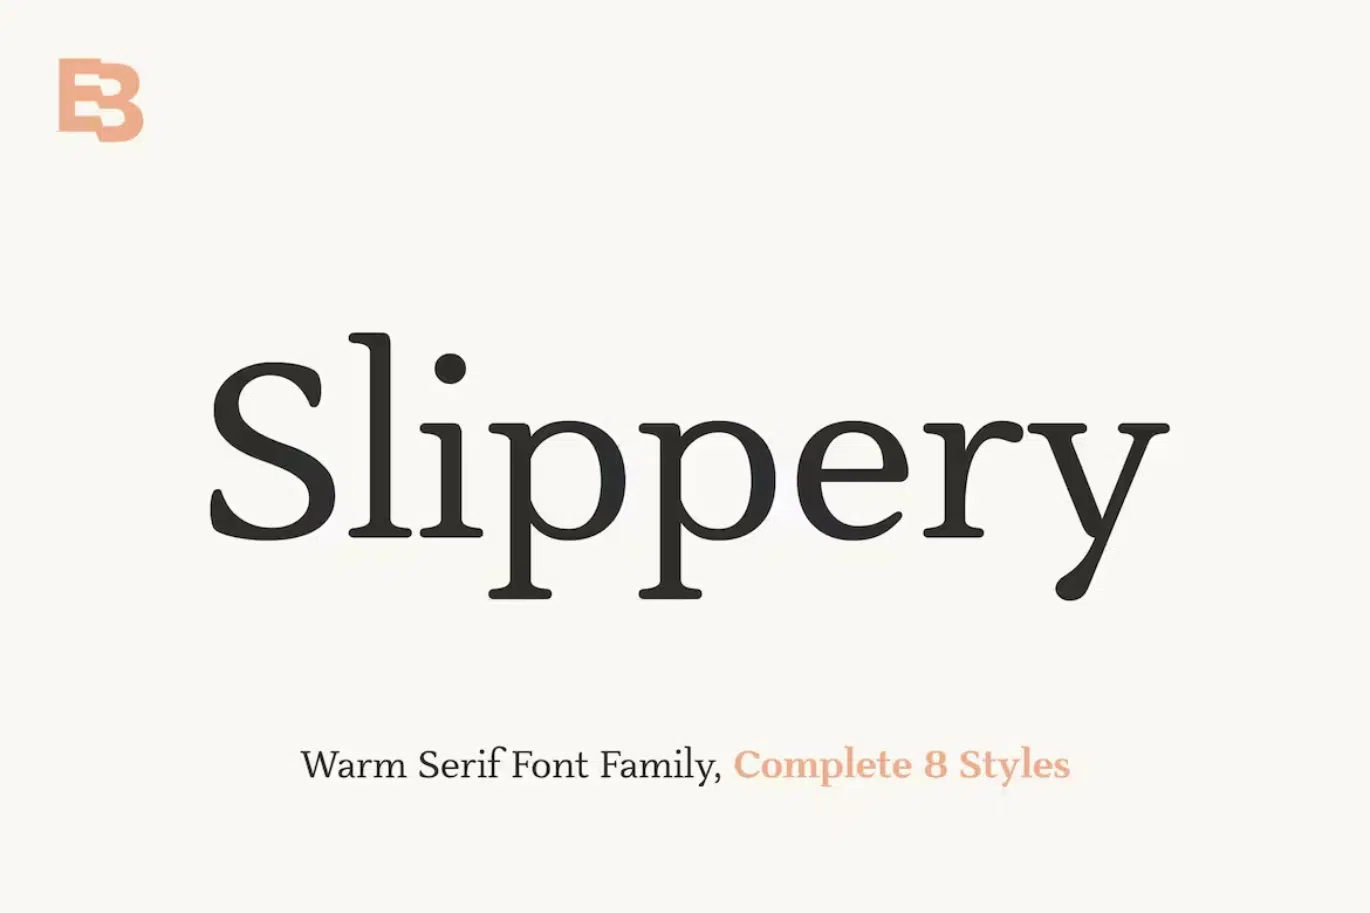 Slippery Font Similar To Garamond